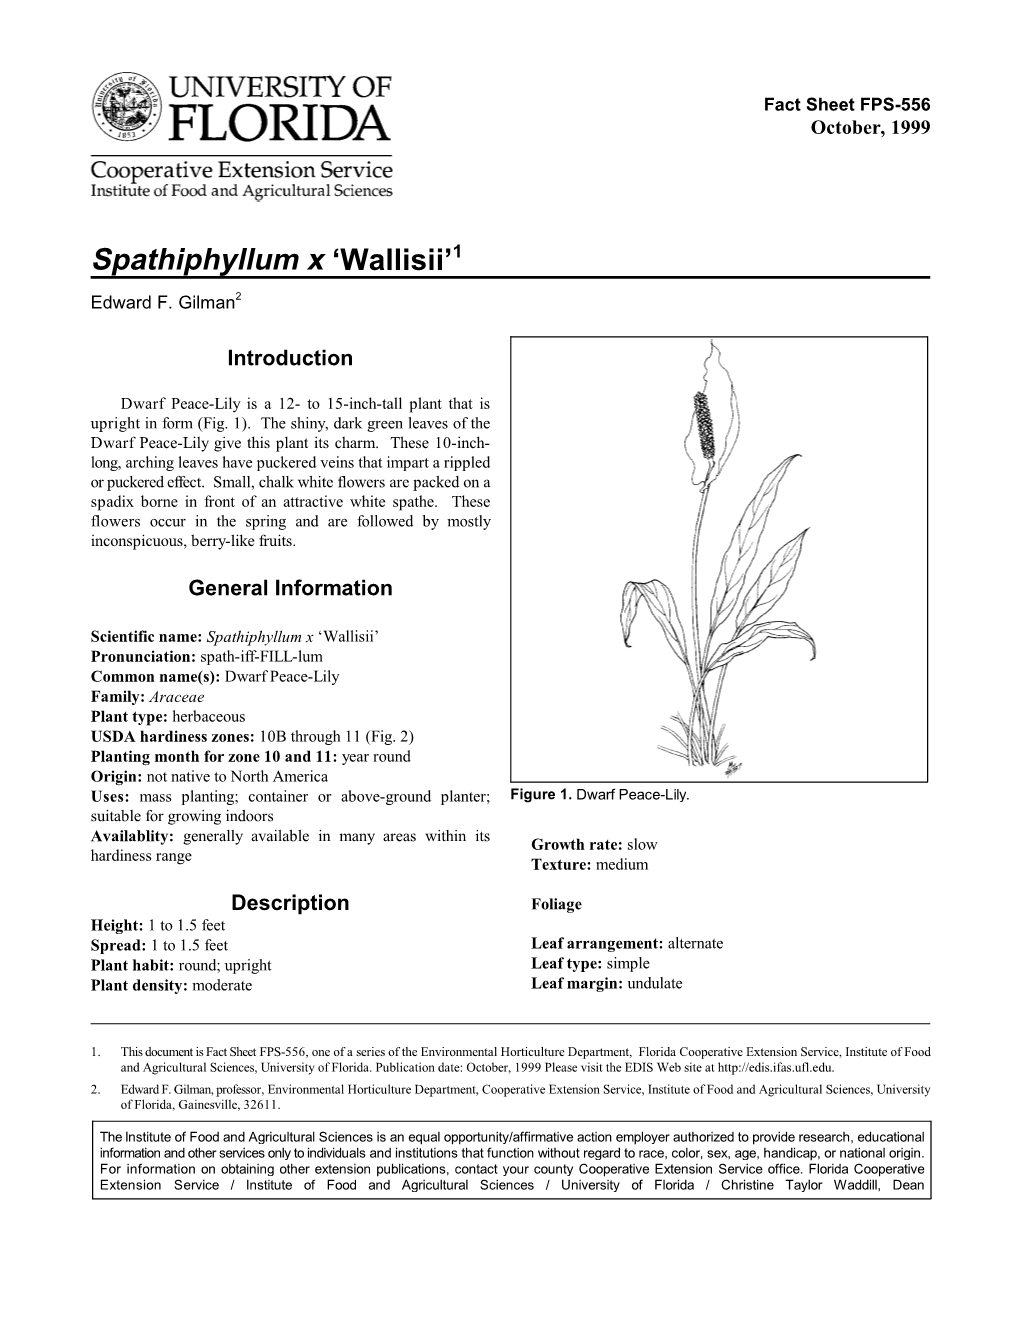 Spathiphyllum X 'Wallisii'1